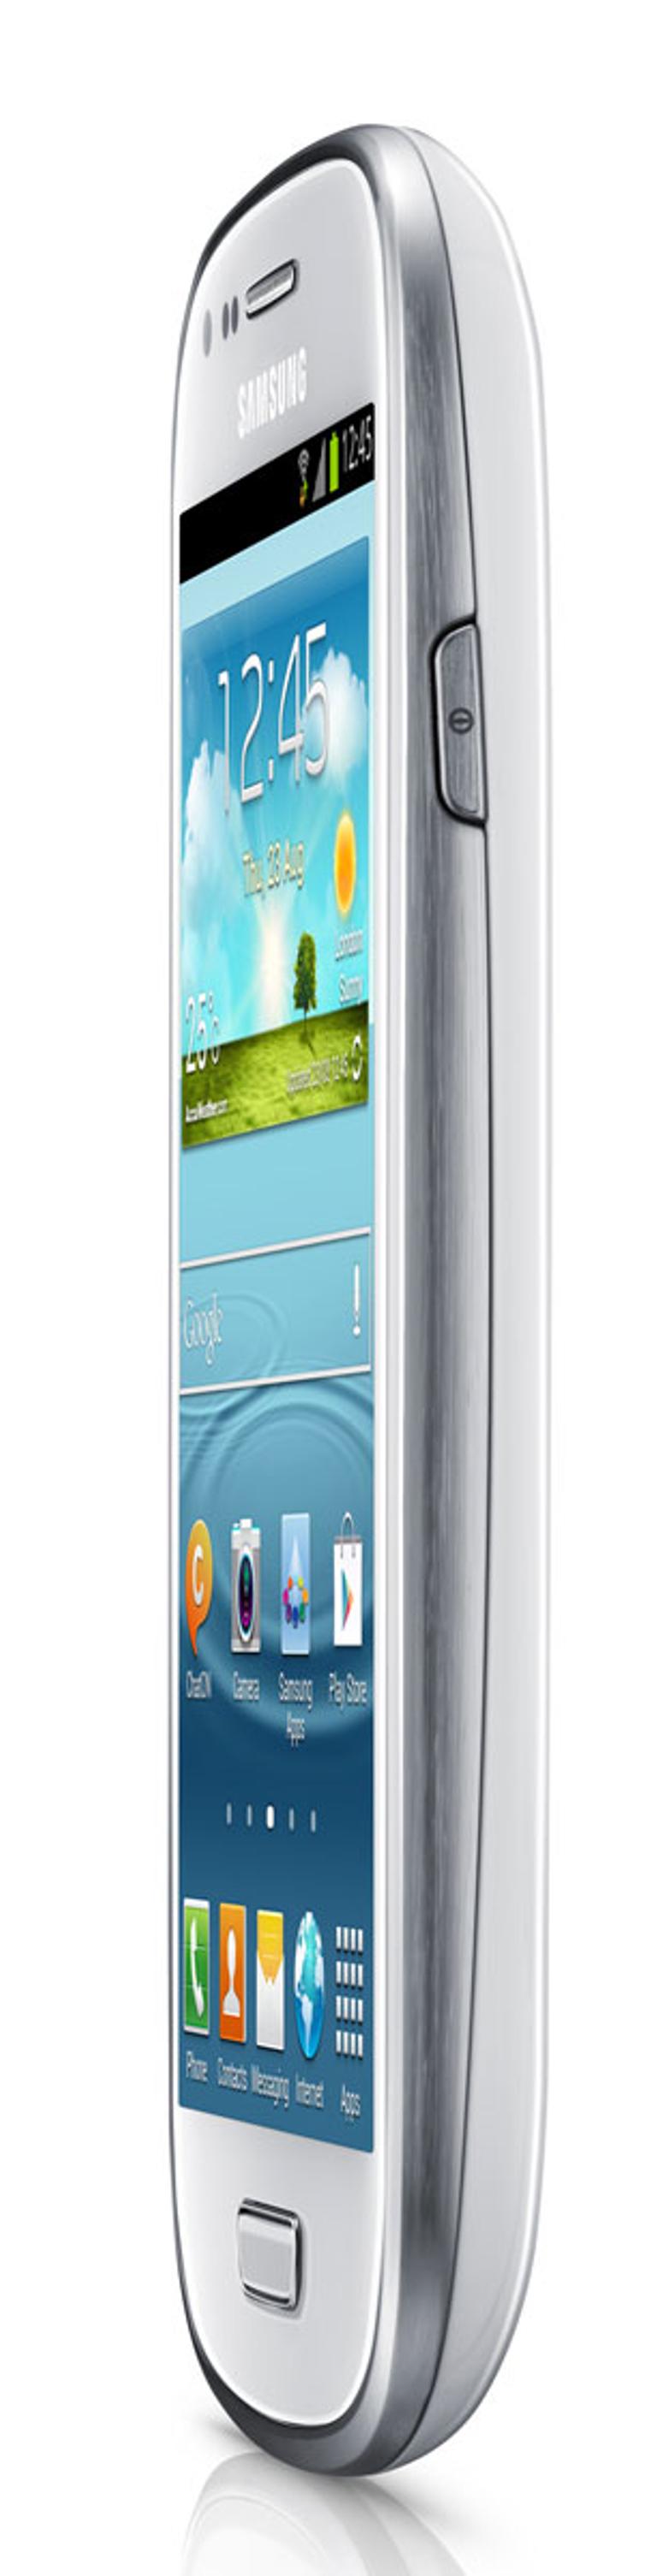 Samsung Galaxy S3 vista de perfil